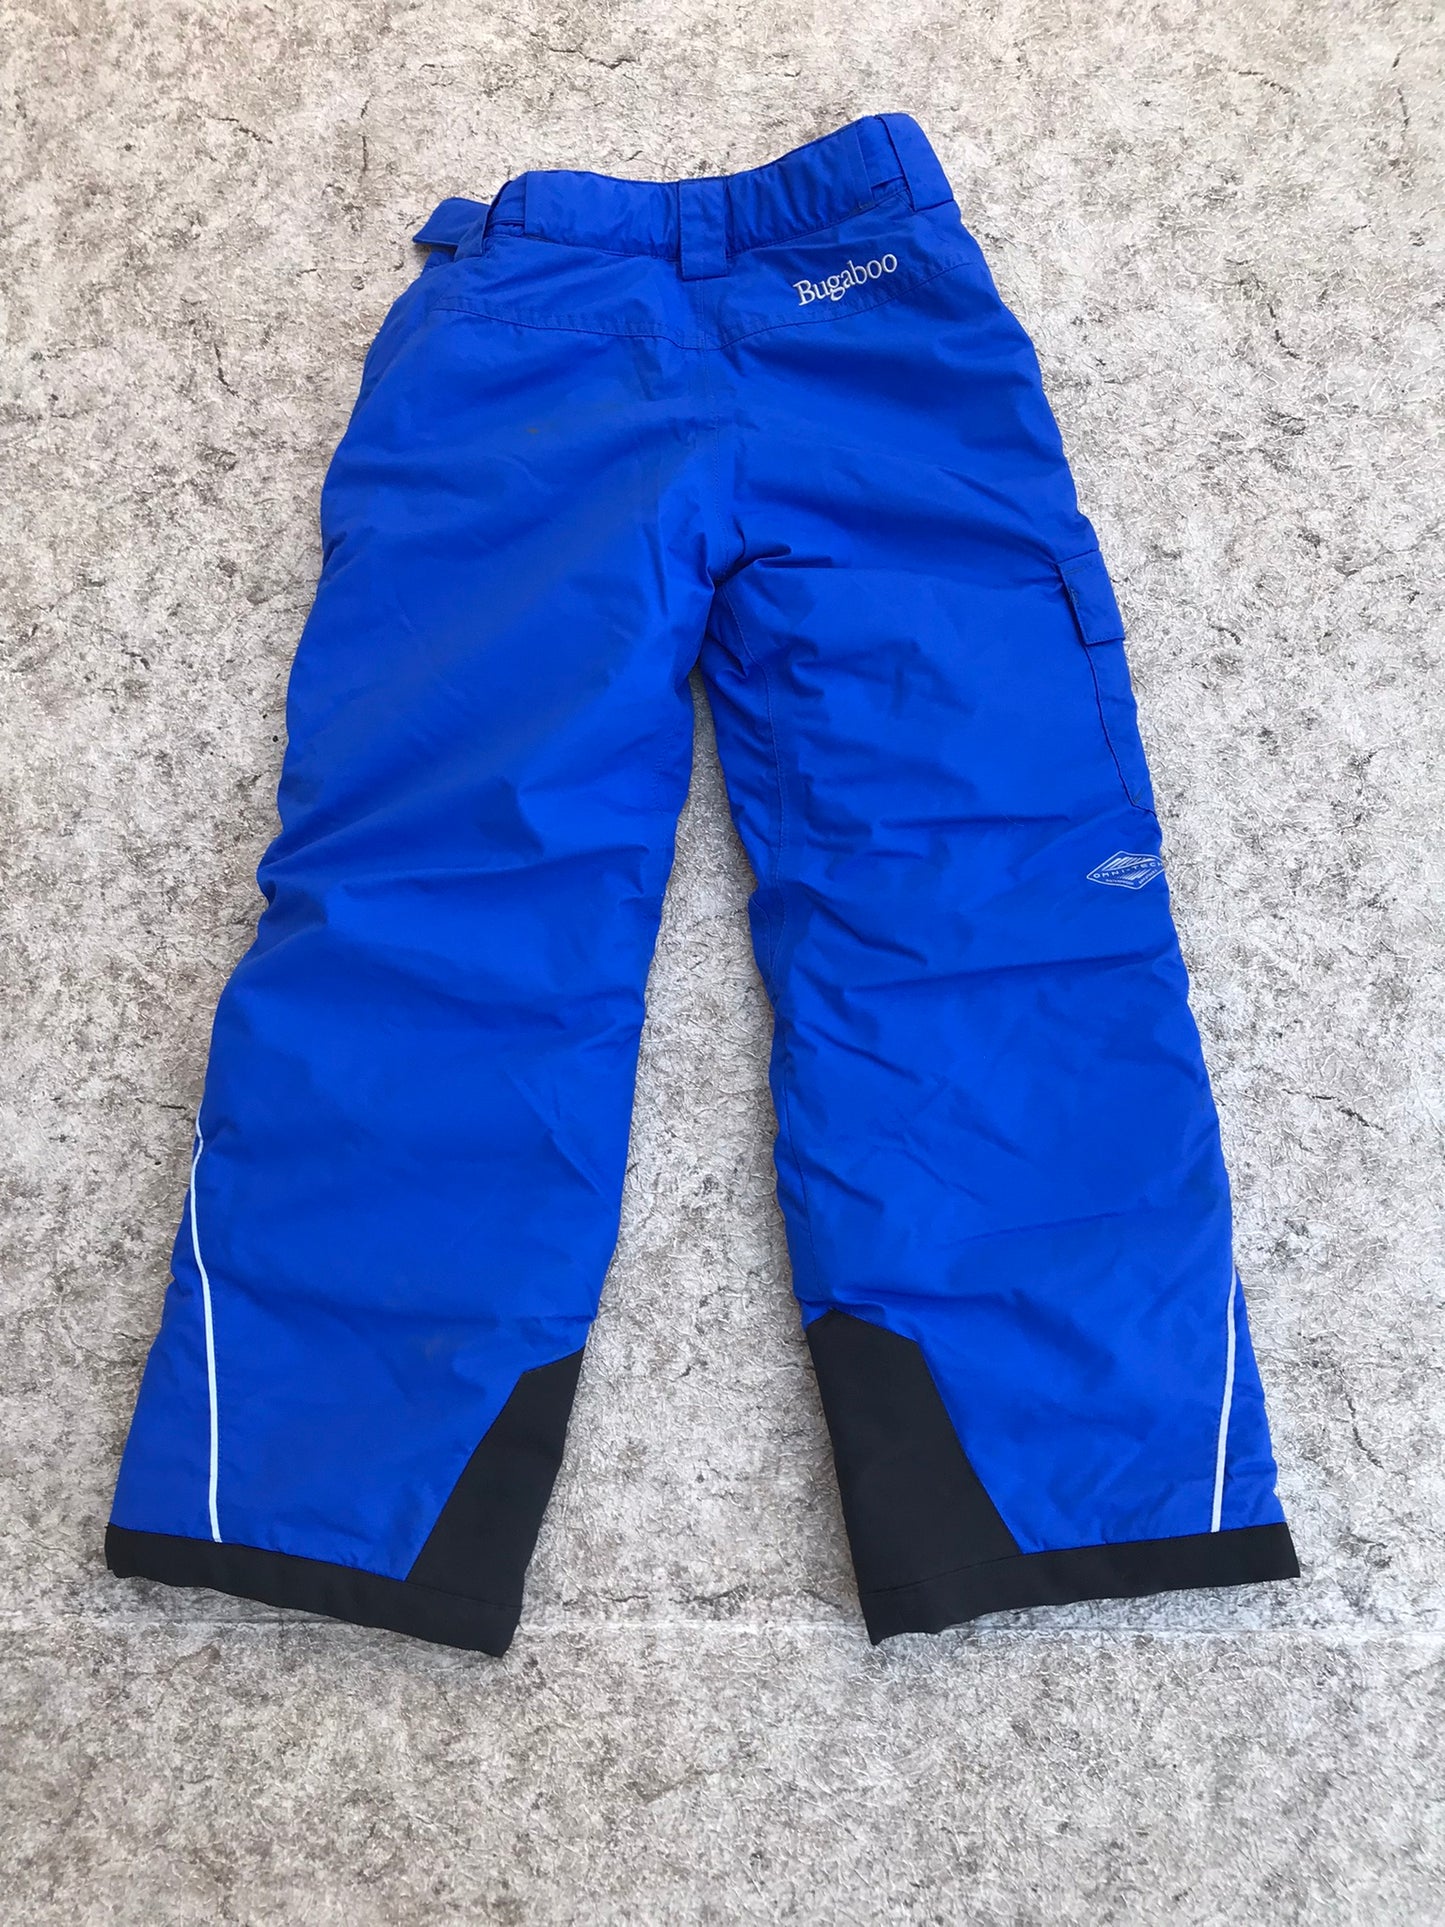 Snow Pants Child Size 7-8 Columbia Ocean Blue New Demo Model